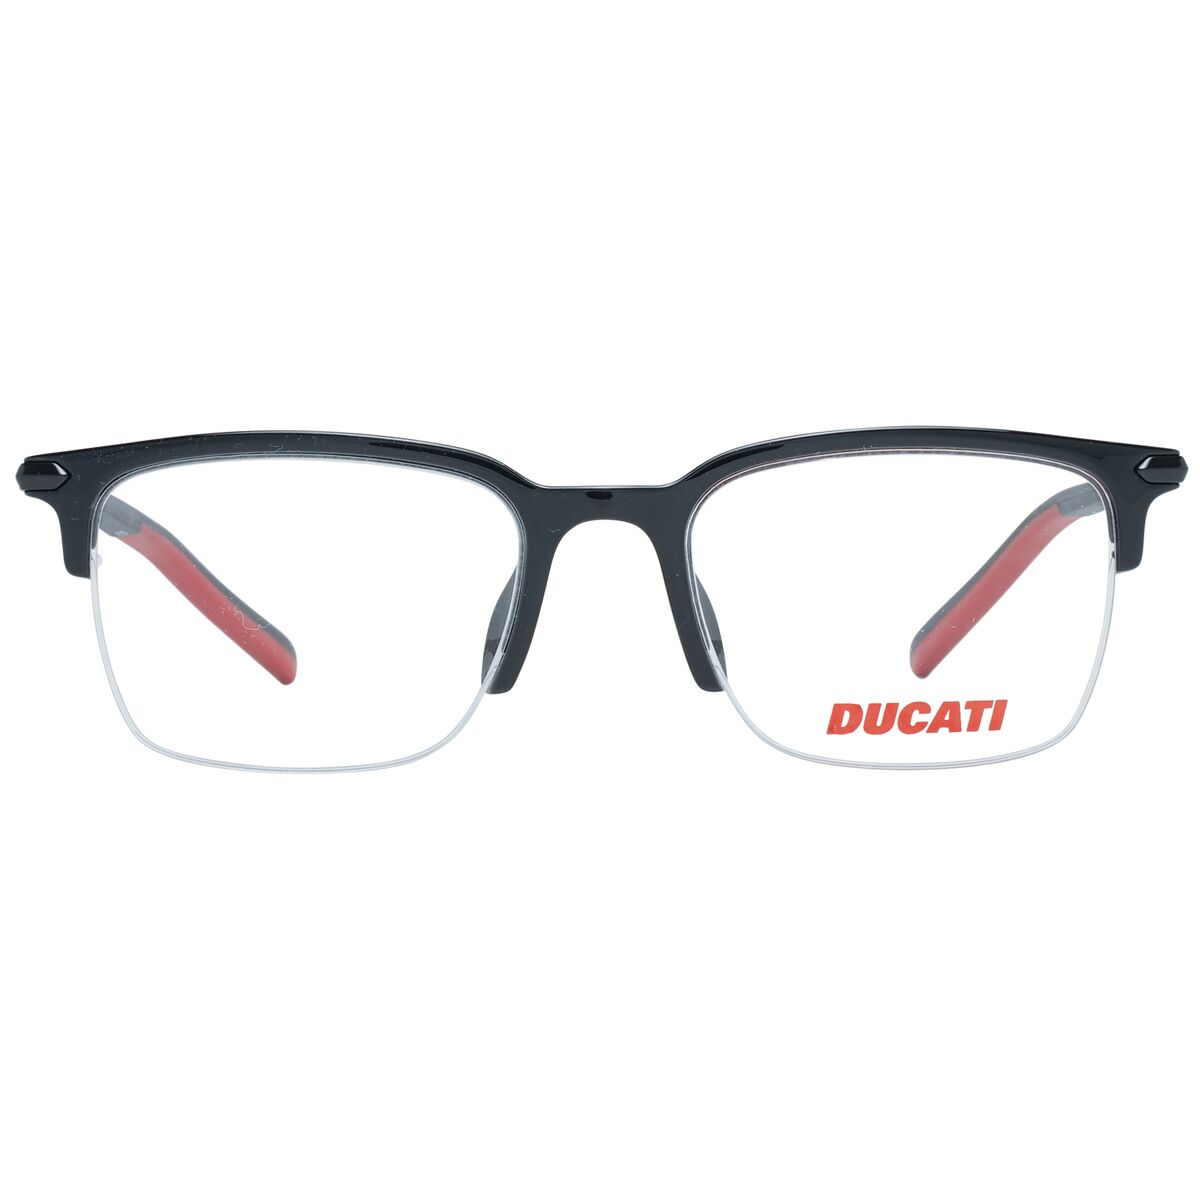 Kaufe Brillenfassung Ducati DA1003 52001 bei AWK Flagship um € 67.00